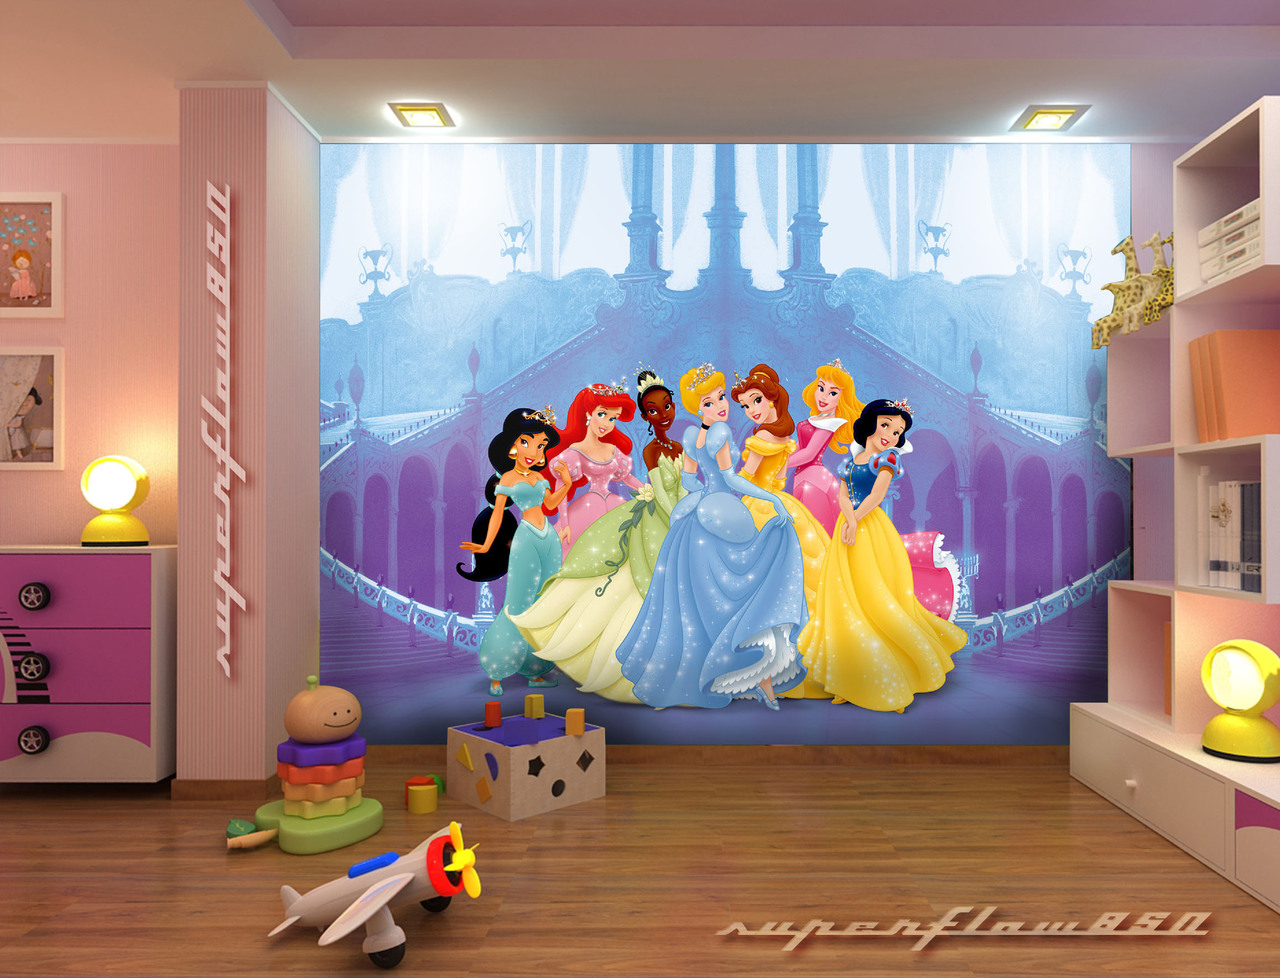 Childrens Disney Wallpaper Murals Just For Sharing